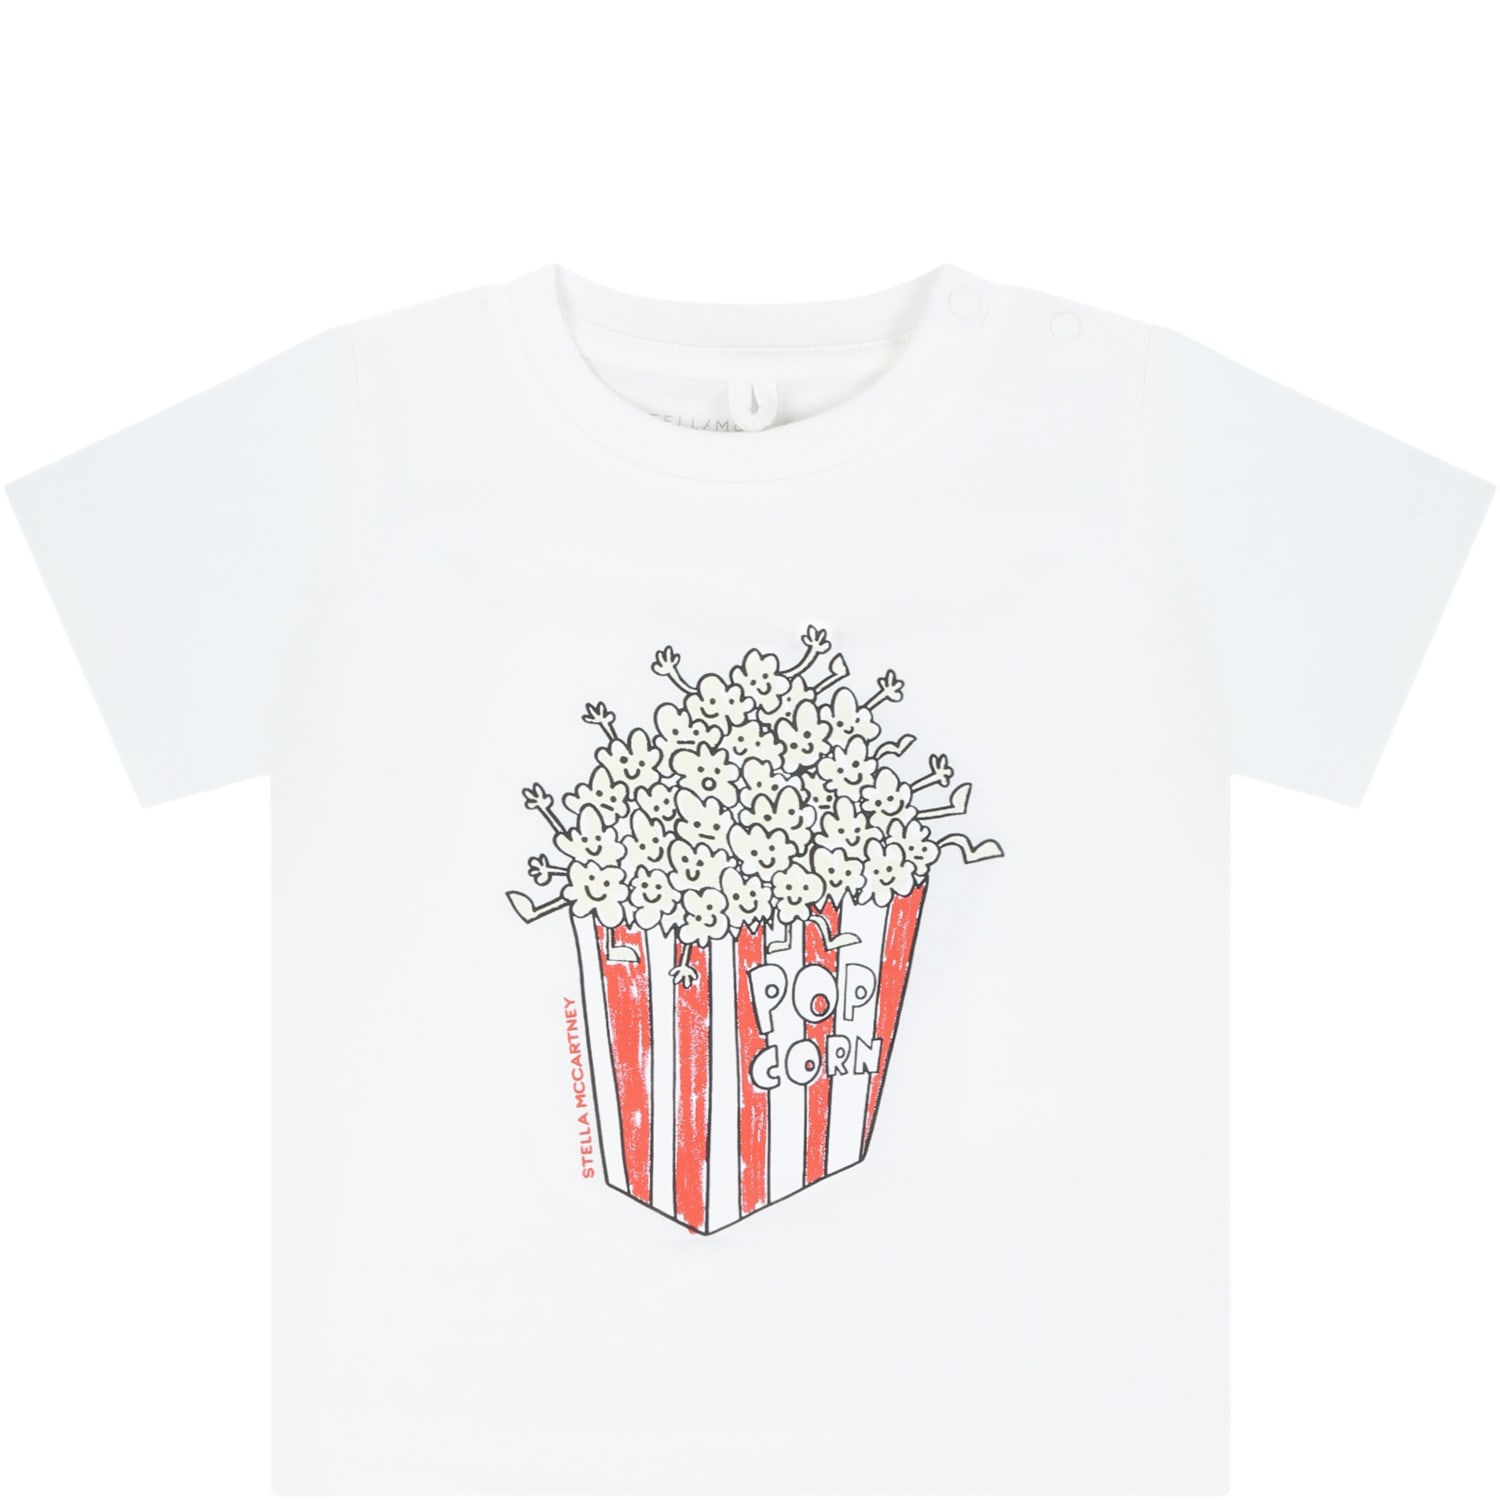 Stella Mccartney White T-shirt For Baby Boy With Pop Corn